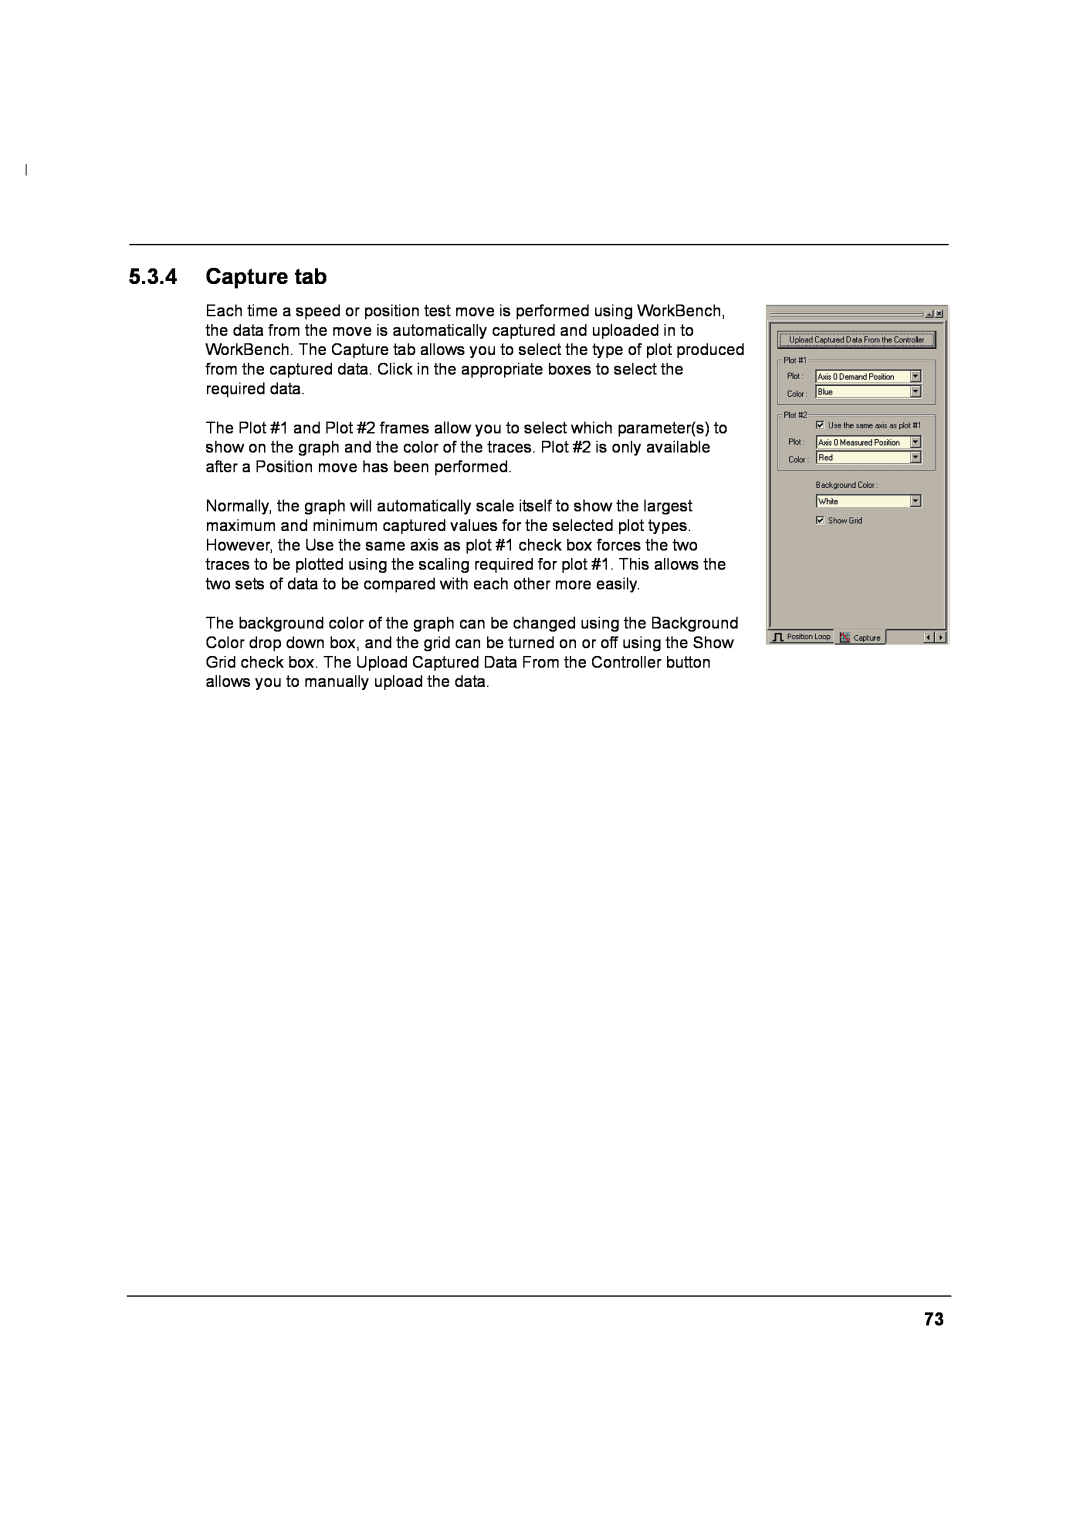 Baldor MN1274 06/2001 installation manual Capture tab 